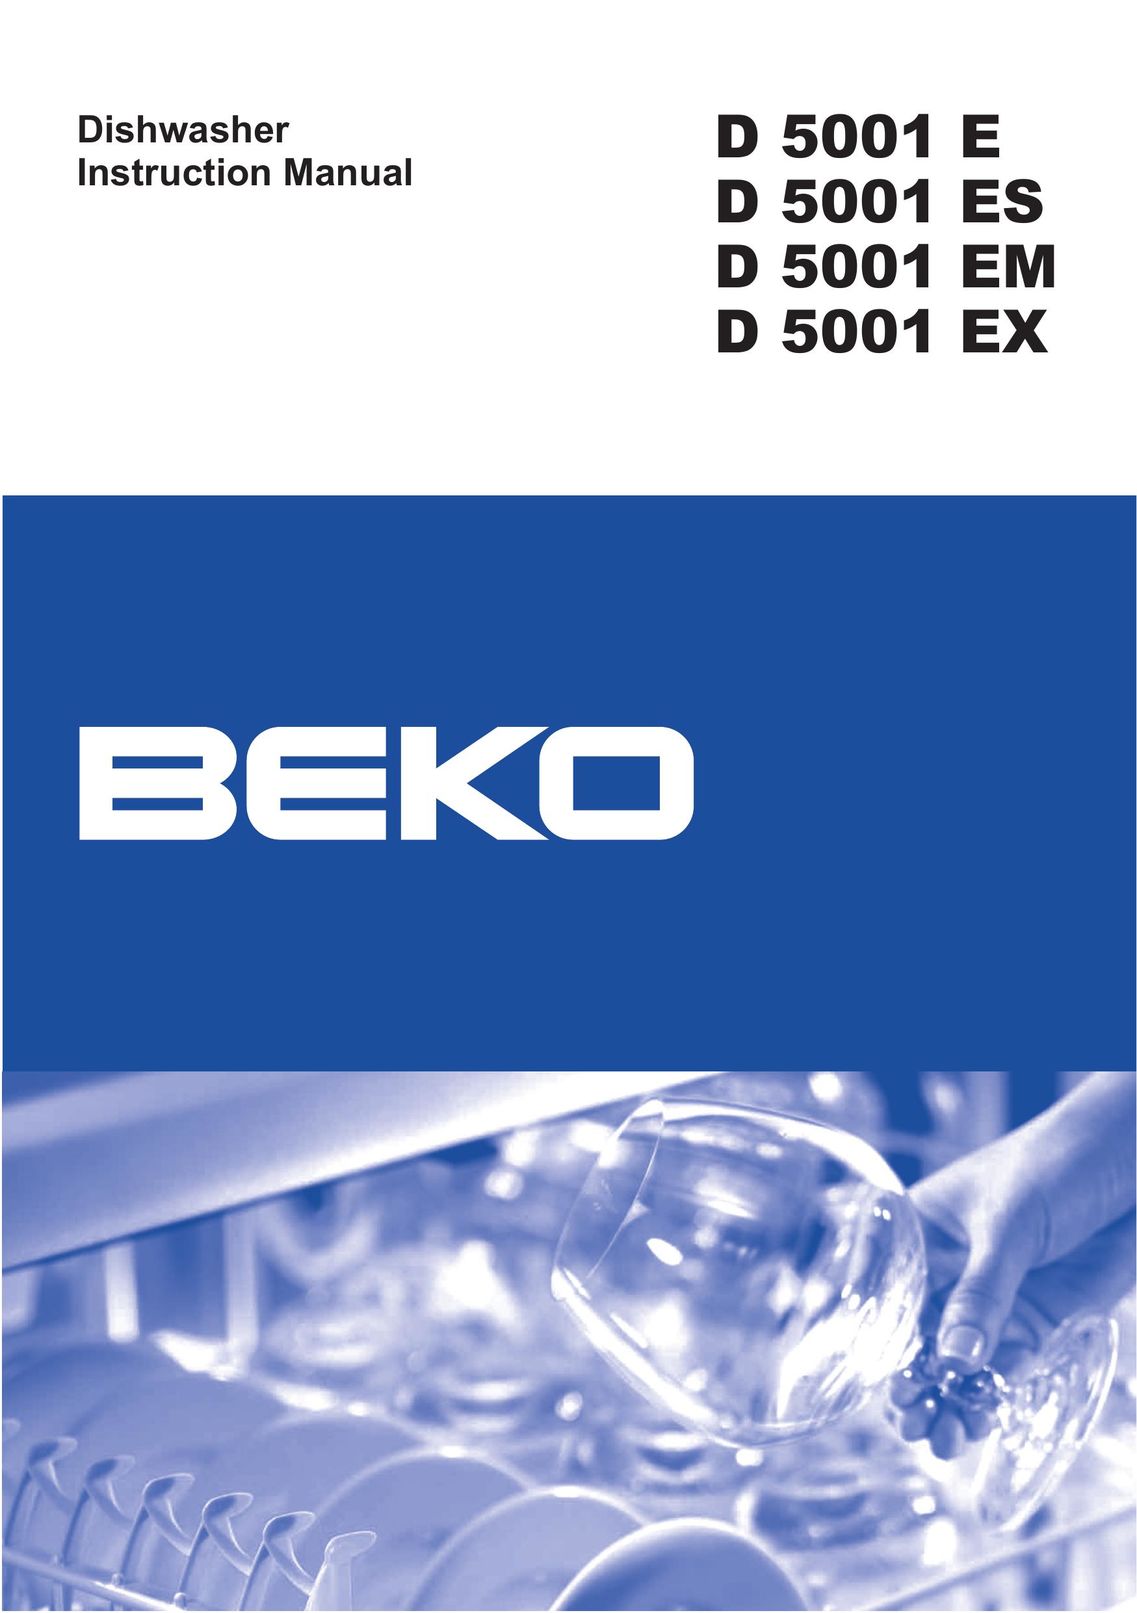 Beko D 5001 E Dishwasher User Manual